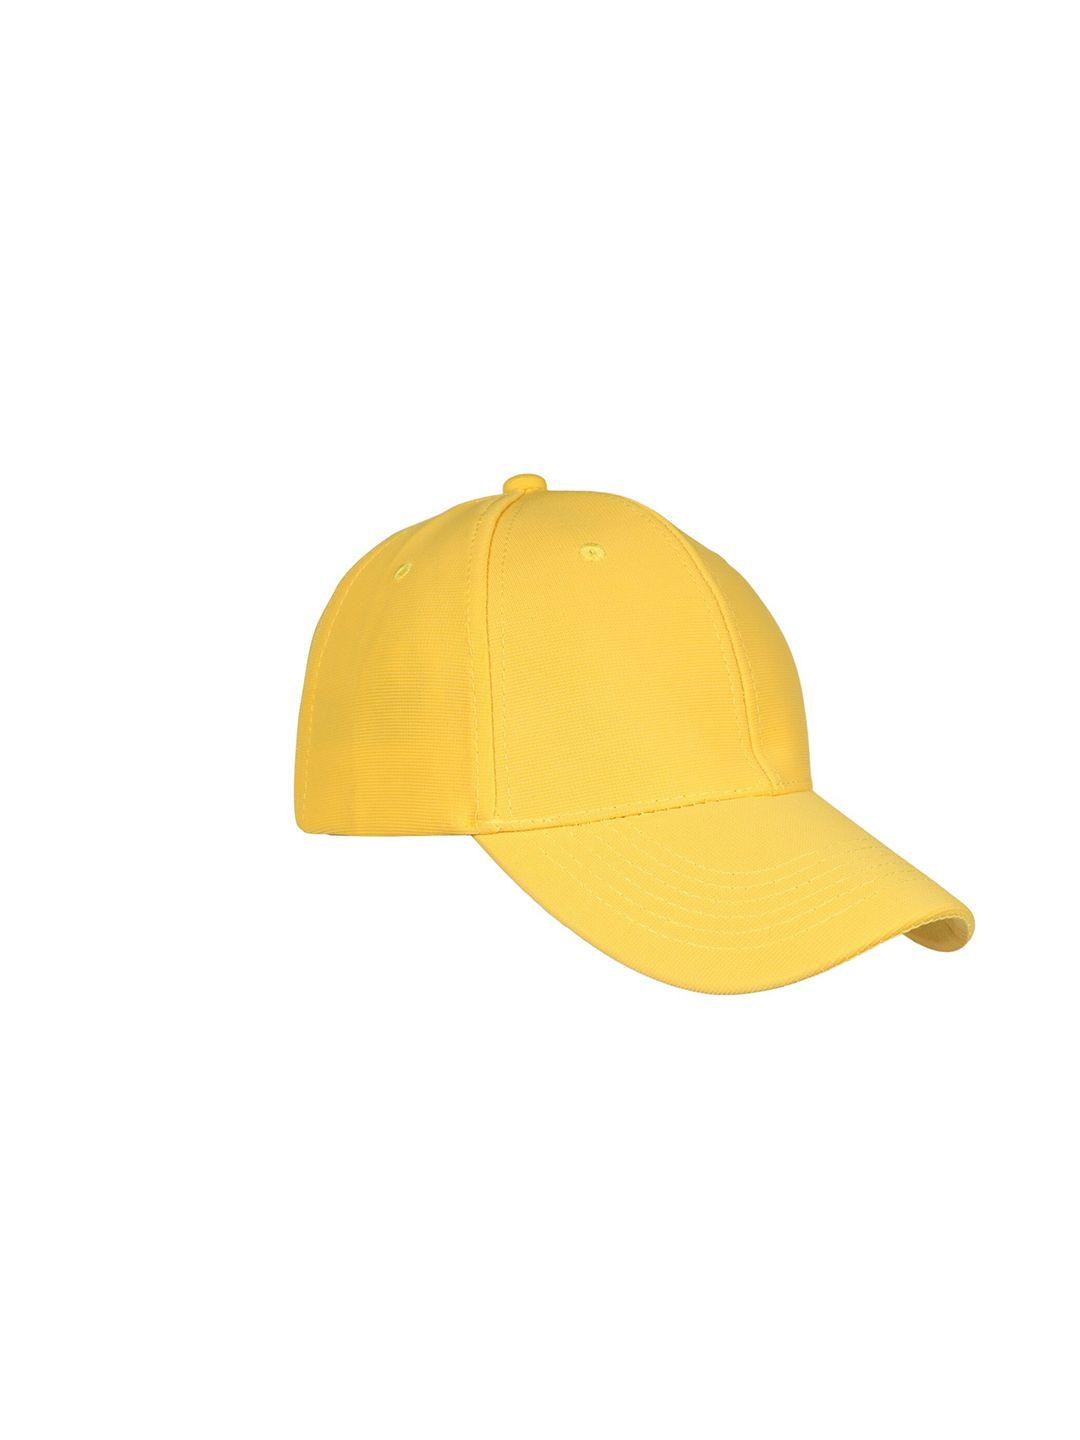 fabseasons unisex yellow baseball cap